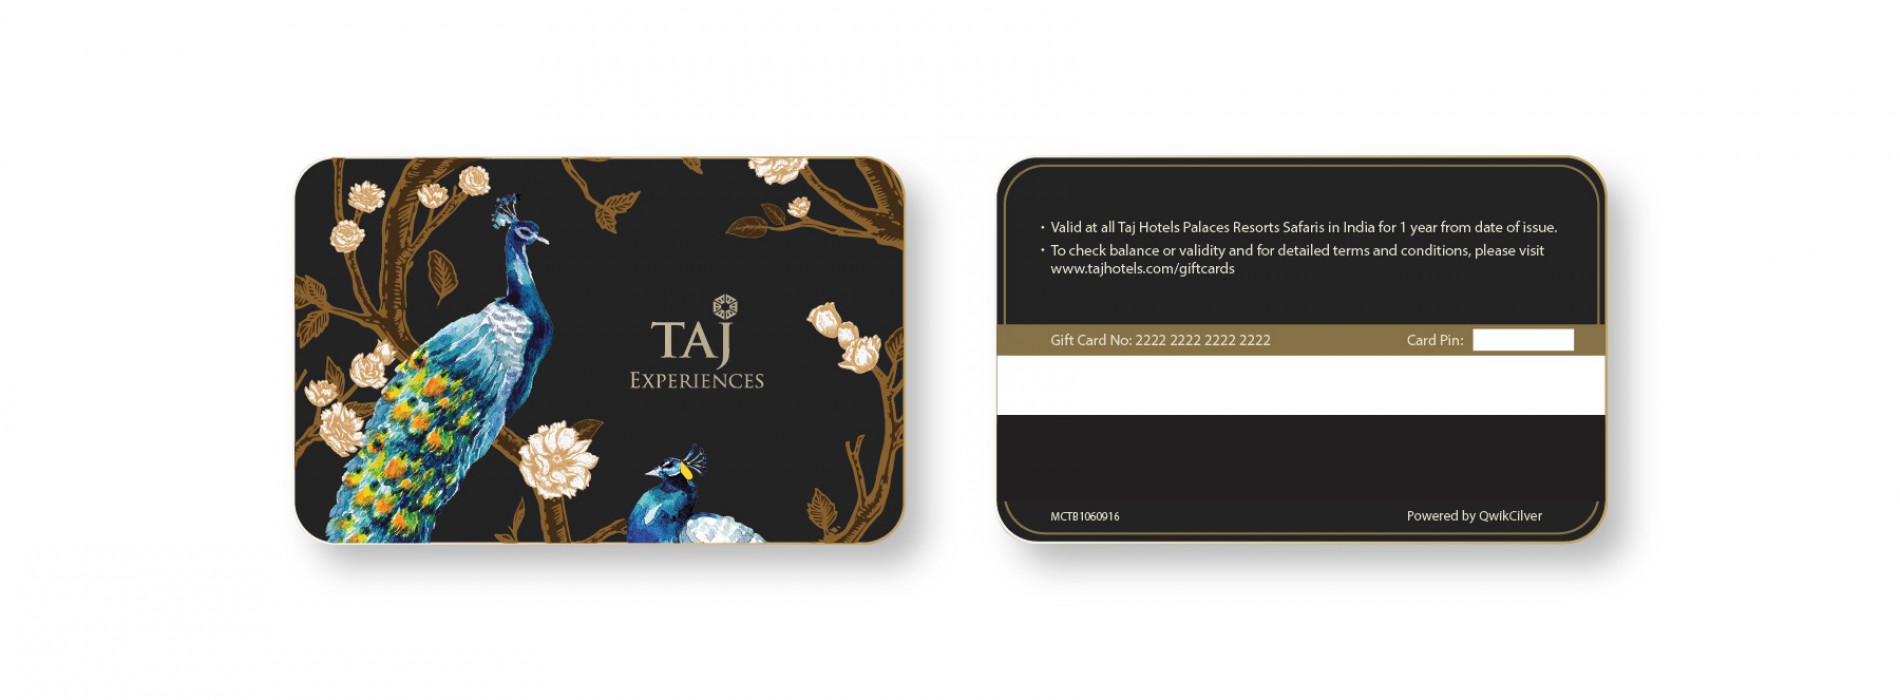 Taj launches Taj Experiences Gift Card